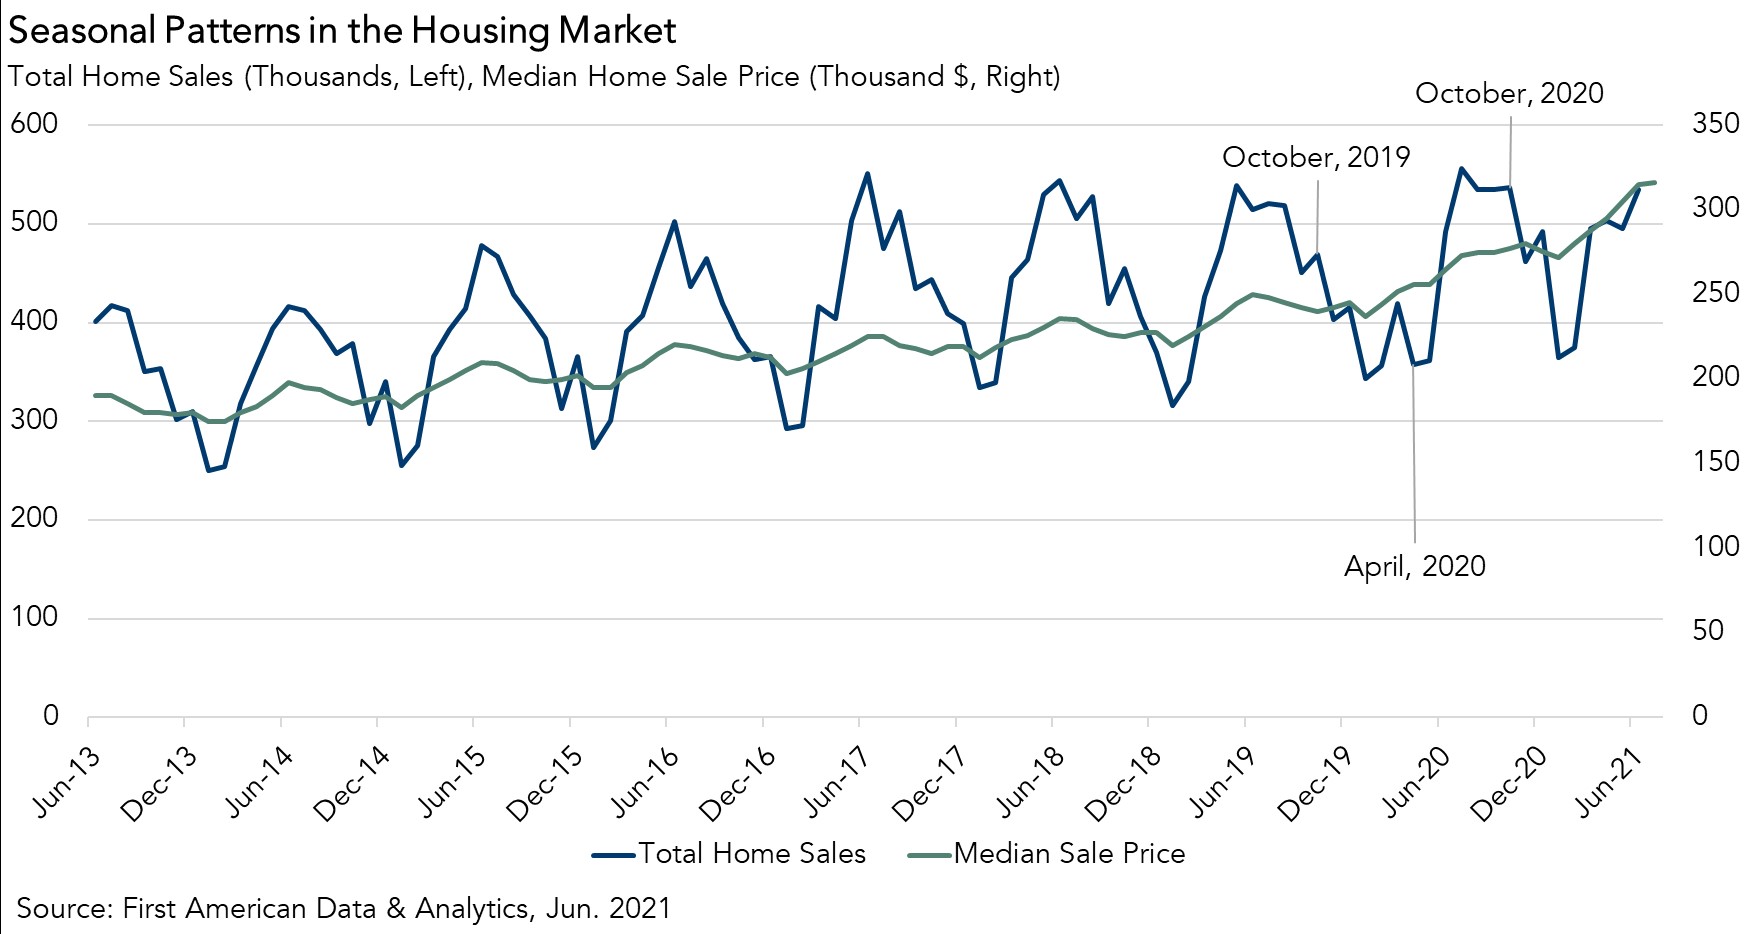 Will Housing Market Seasonality Return to Normal?